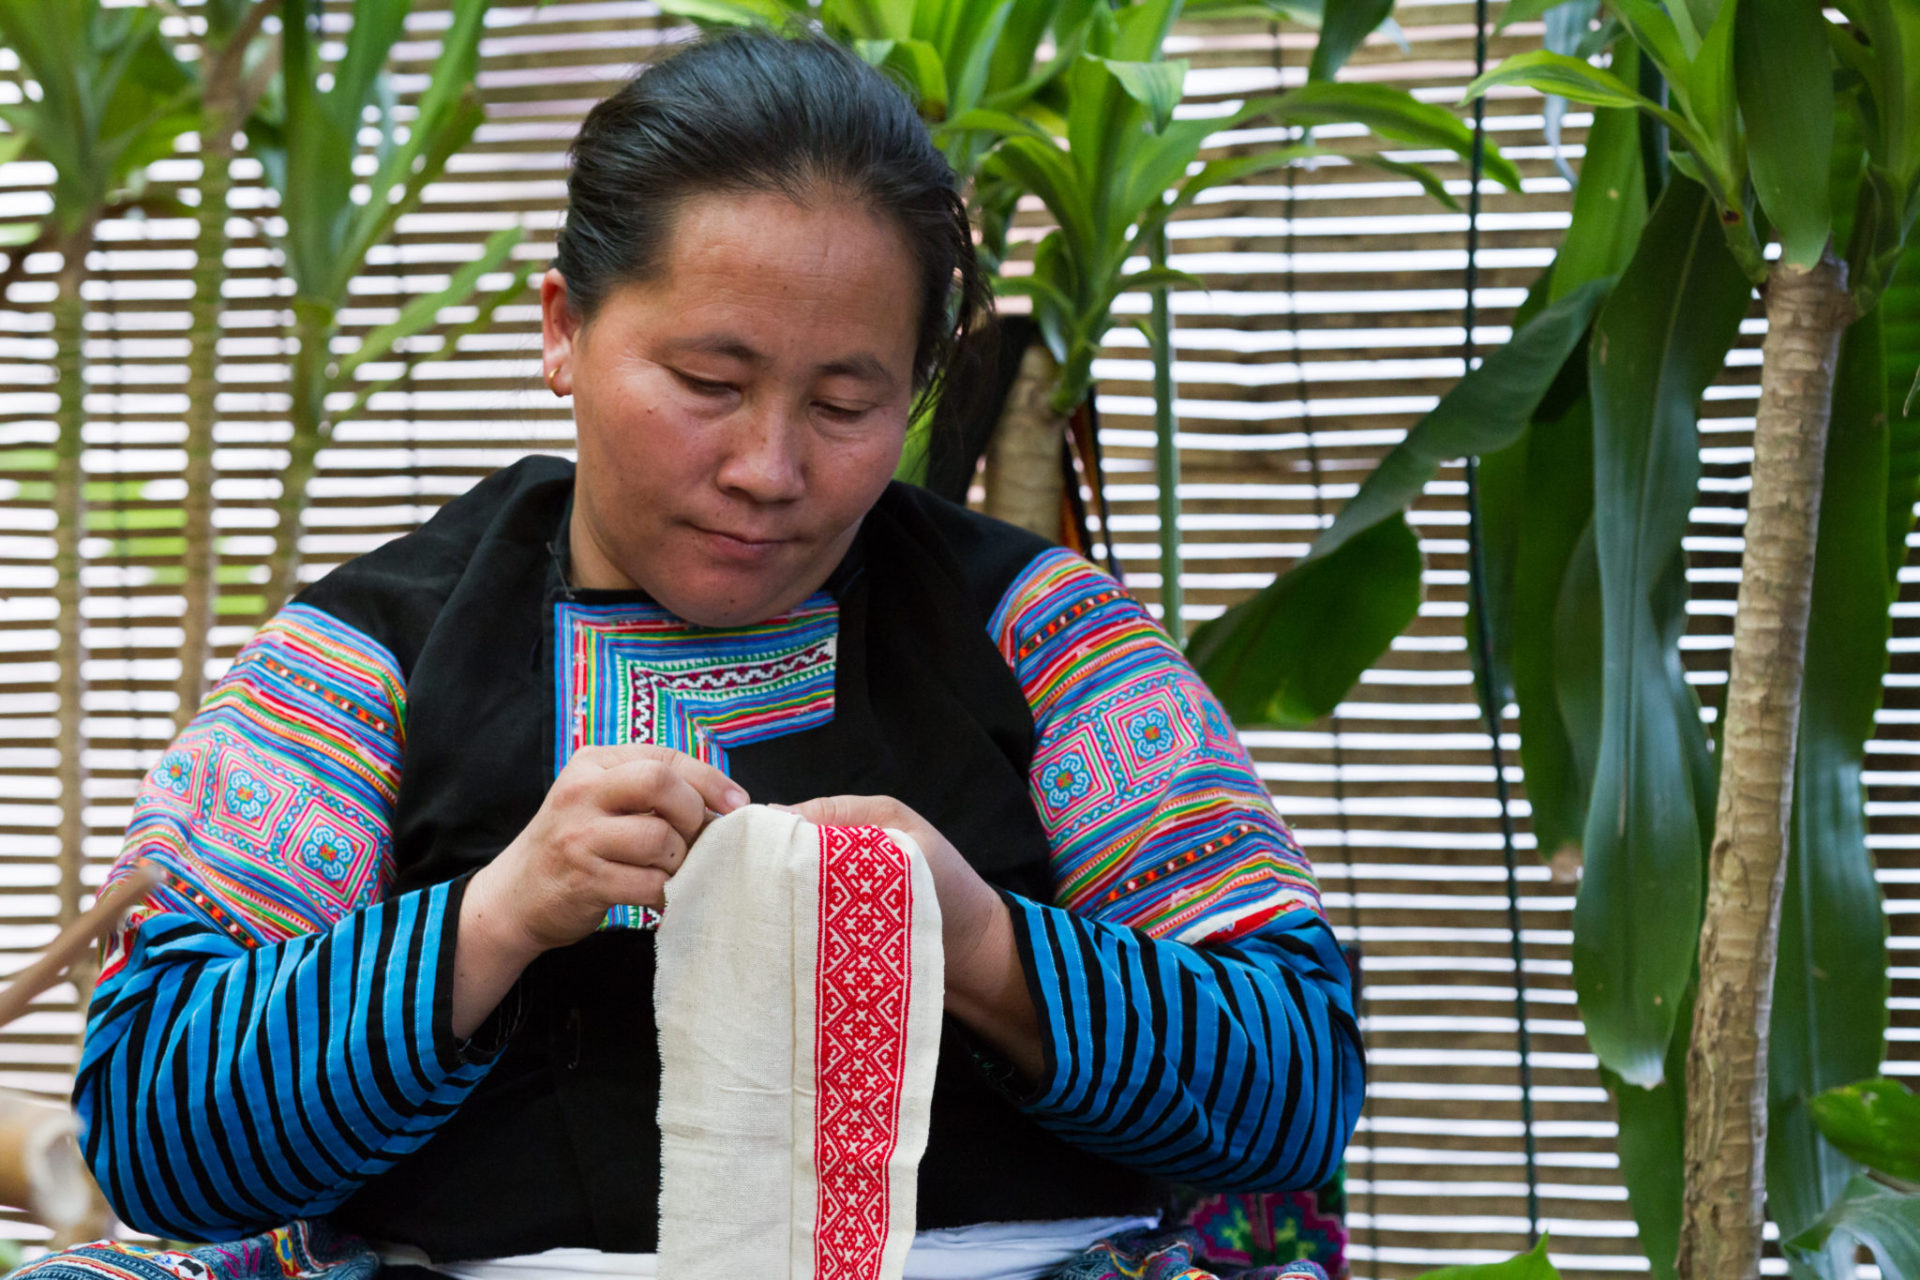 Mang Hmong artisan doing detailed embroidery